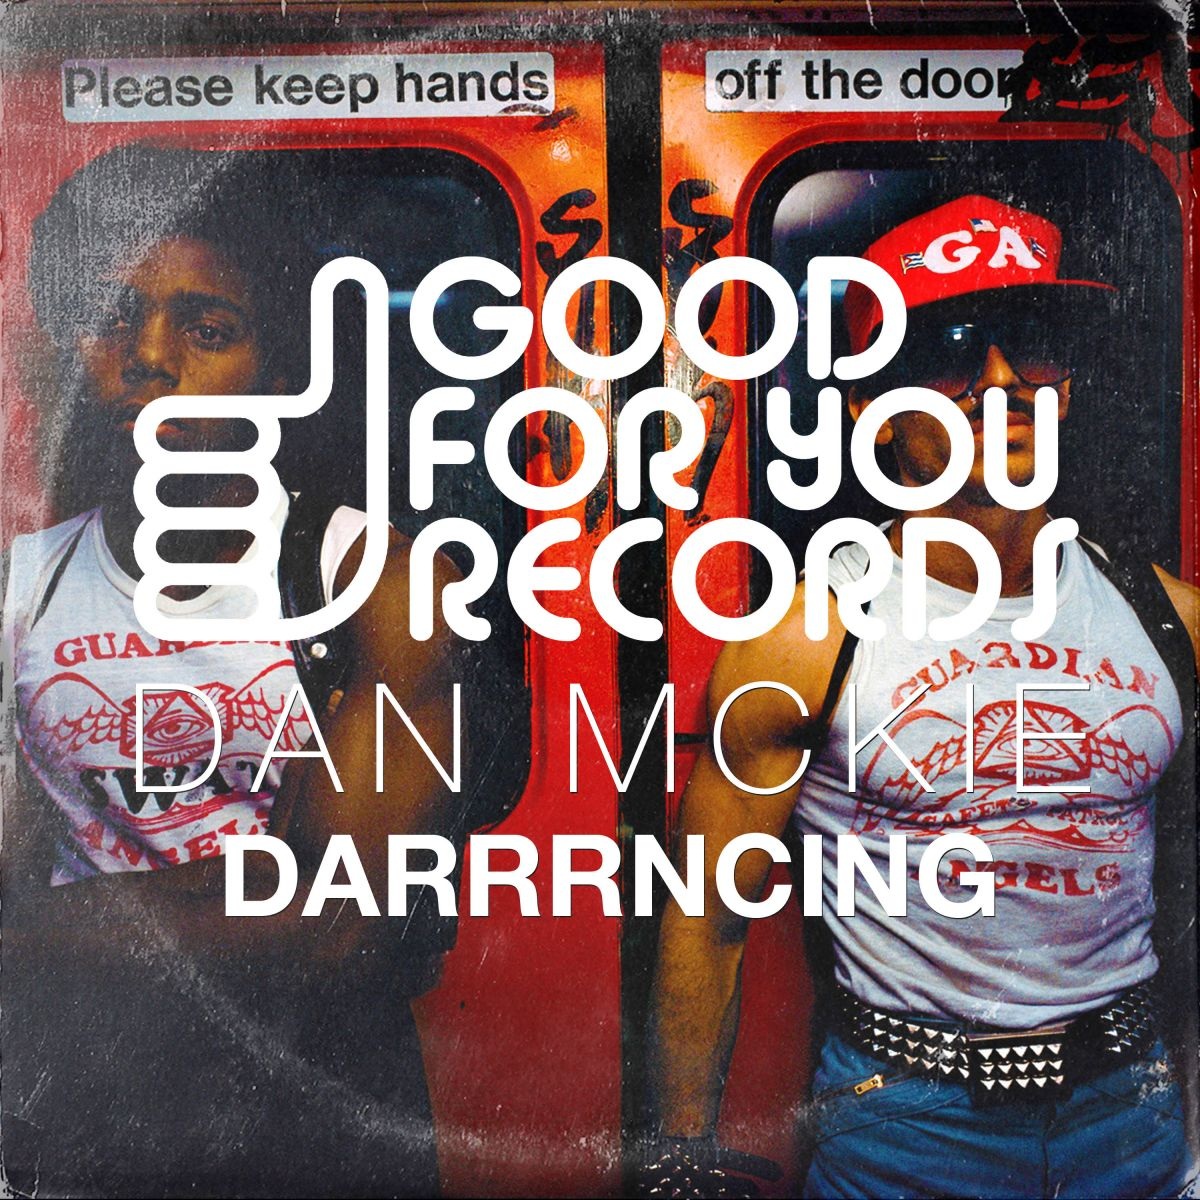 Dan McKie - Darrrncing / Good For You Records